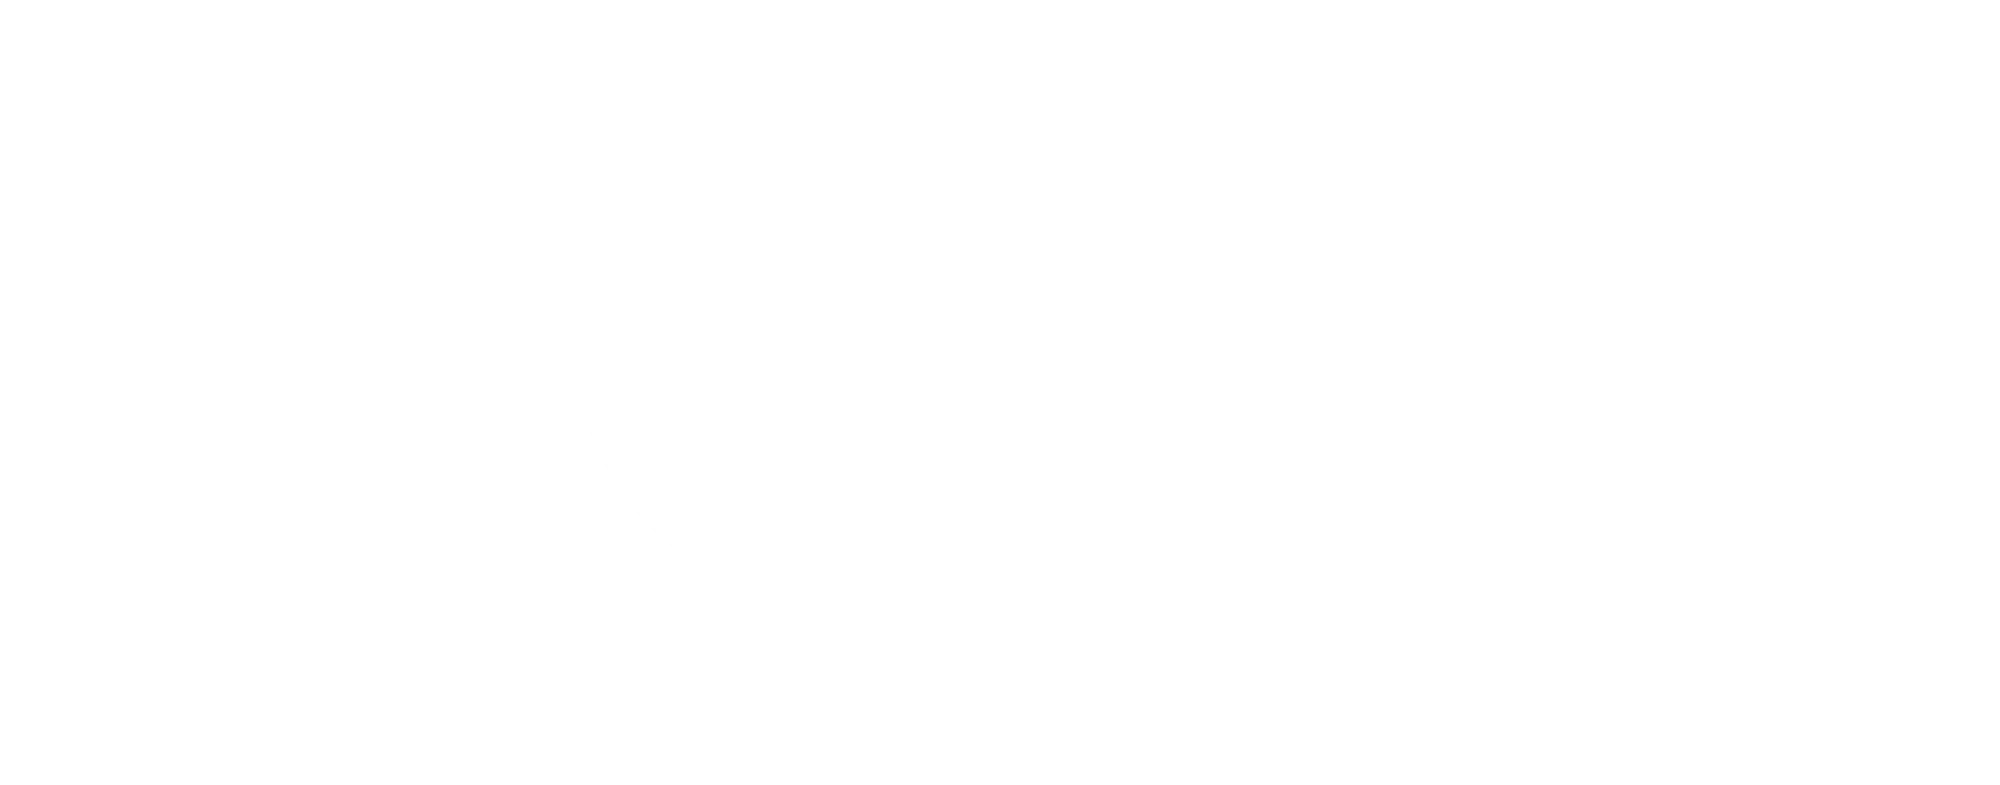 North Carolina Theatre Conference (NCTC) logo